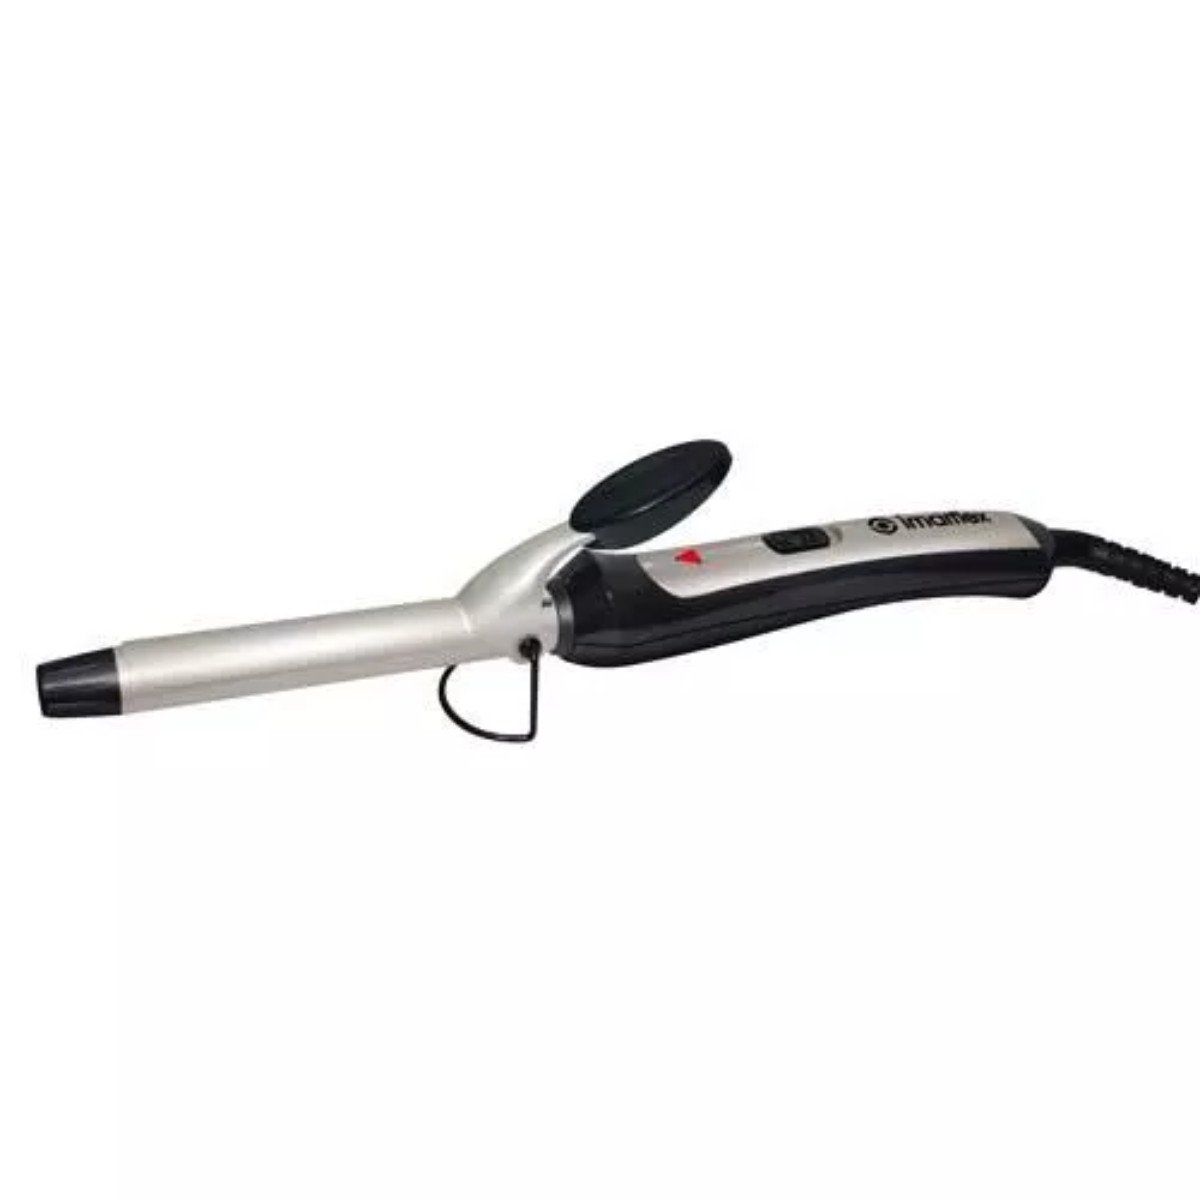 Imarflex IHS-210C Hair Curler